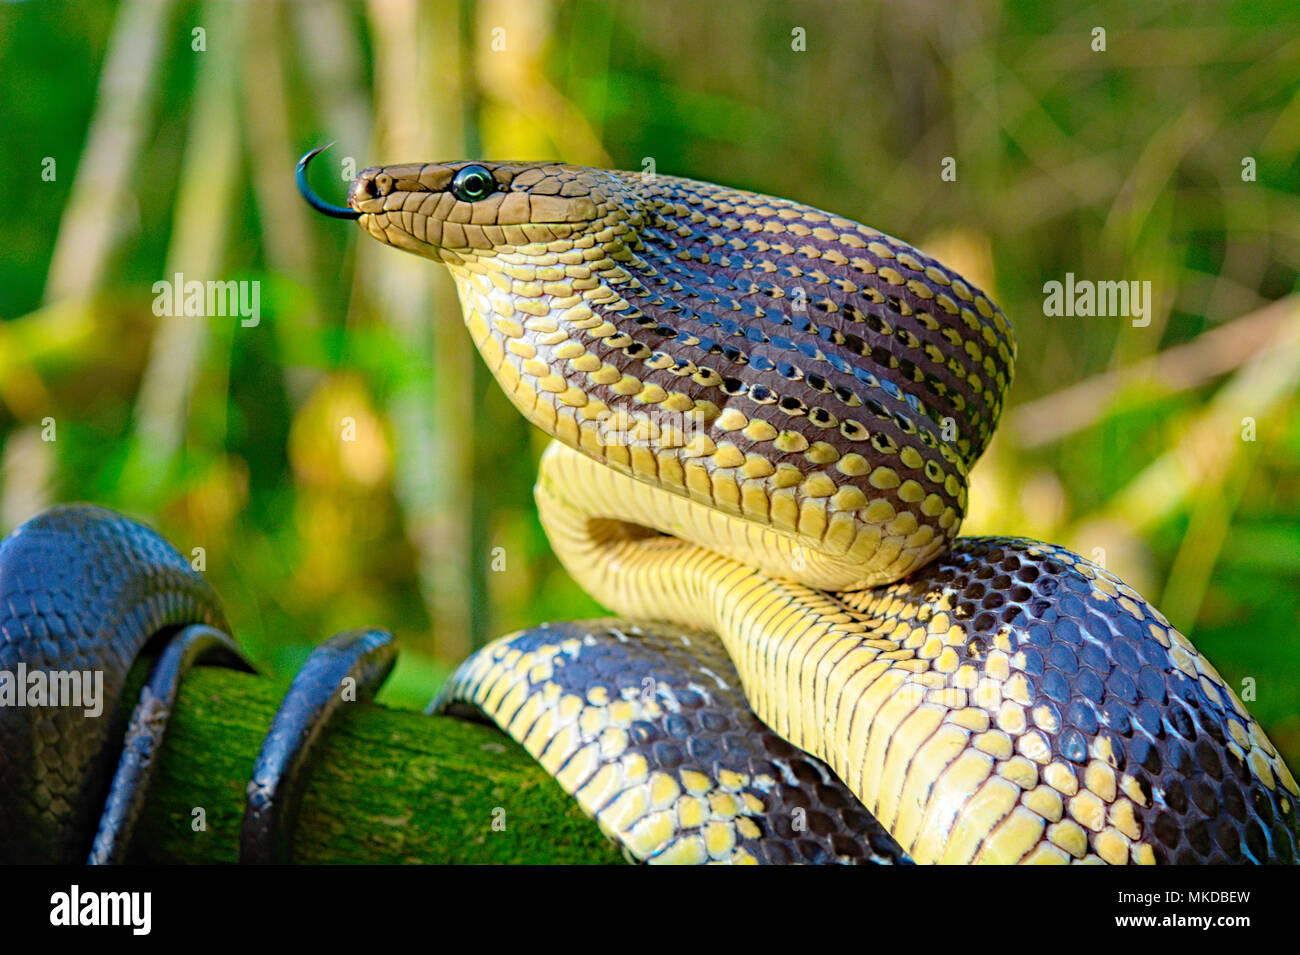 Retrato de Jansens Gonyosoma jansenii Rat (Serpiente), al norte de Sulawesi. Foto de stock